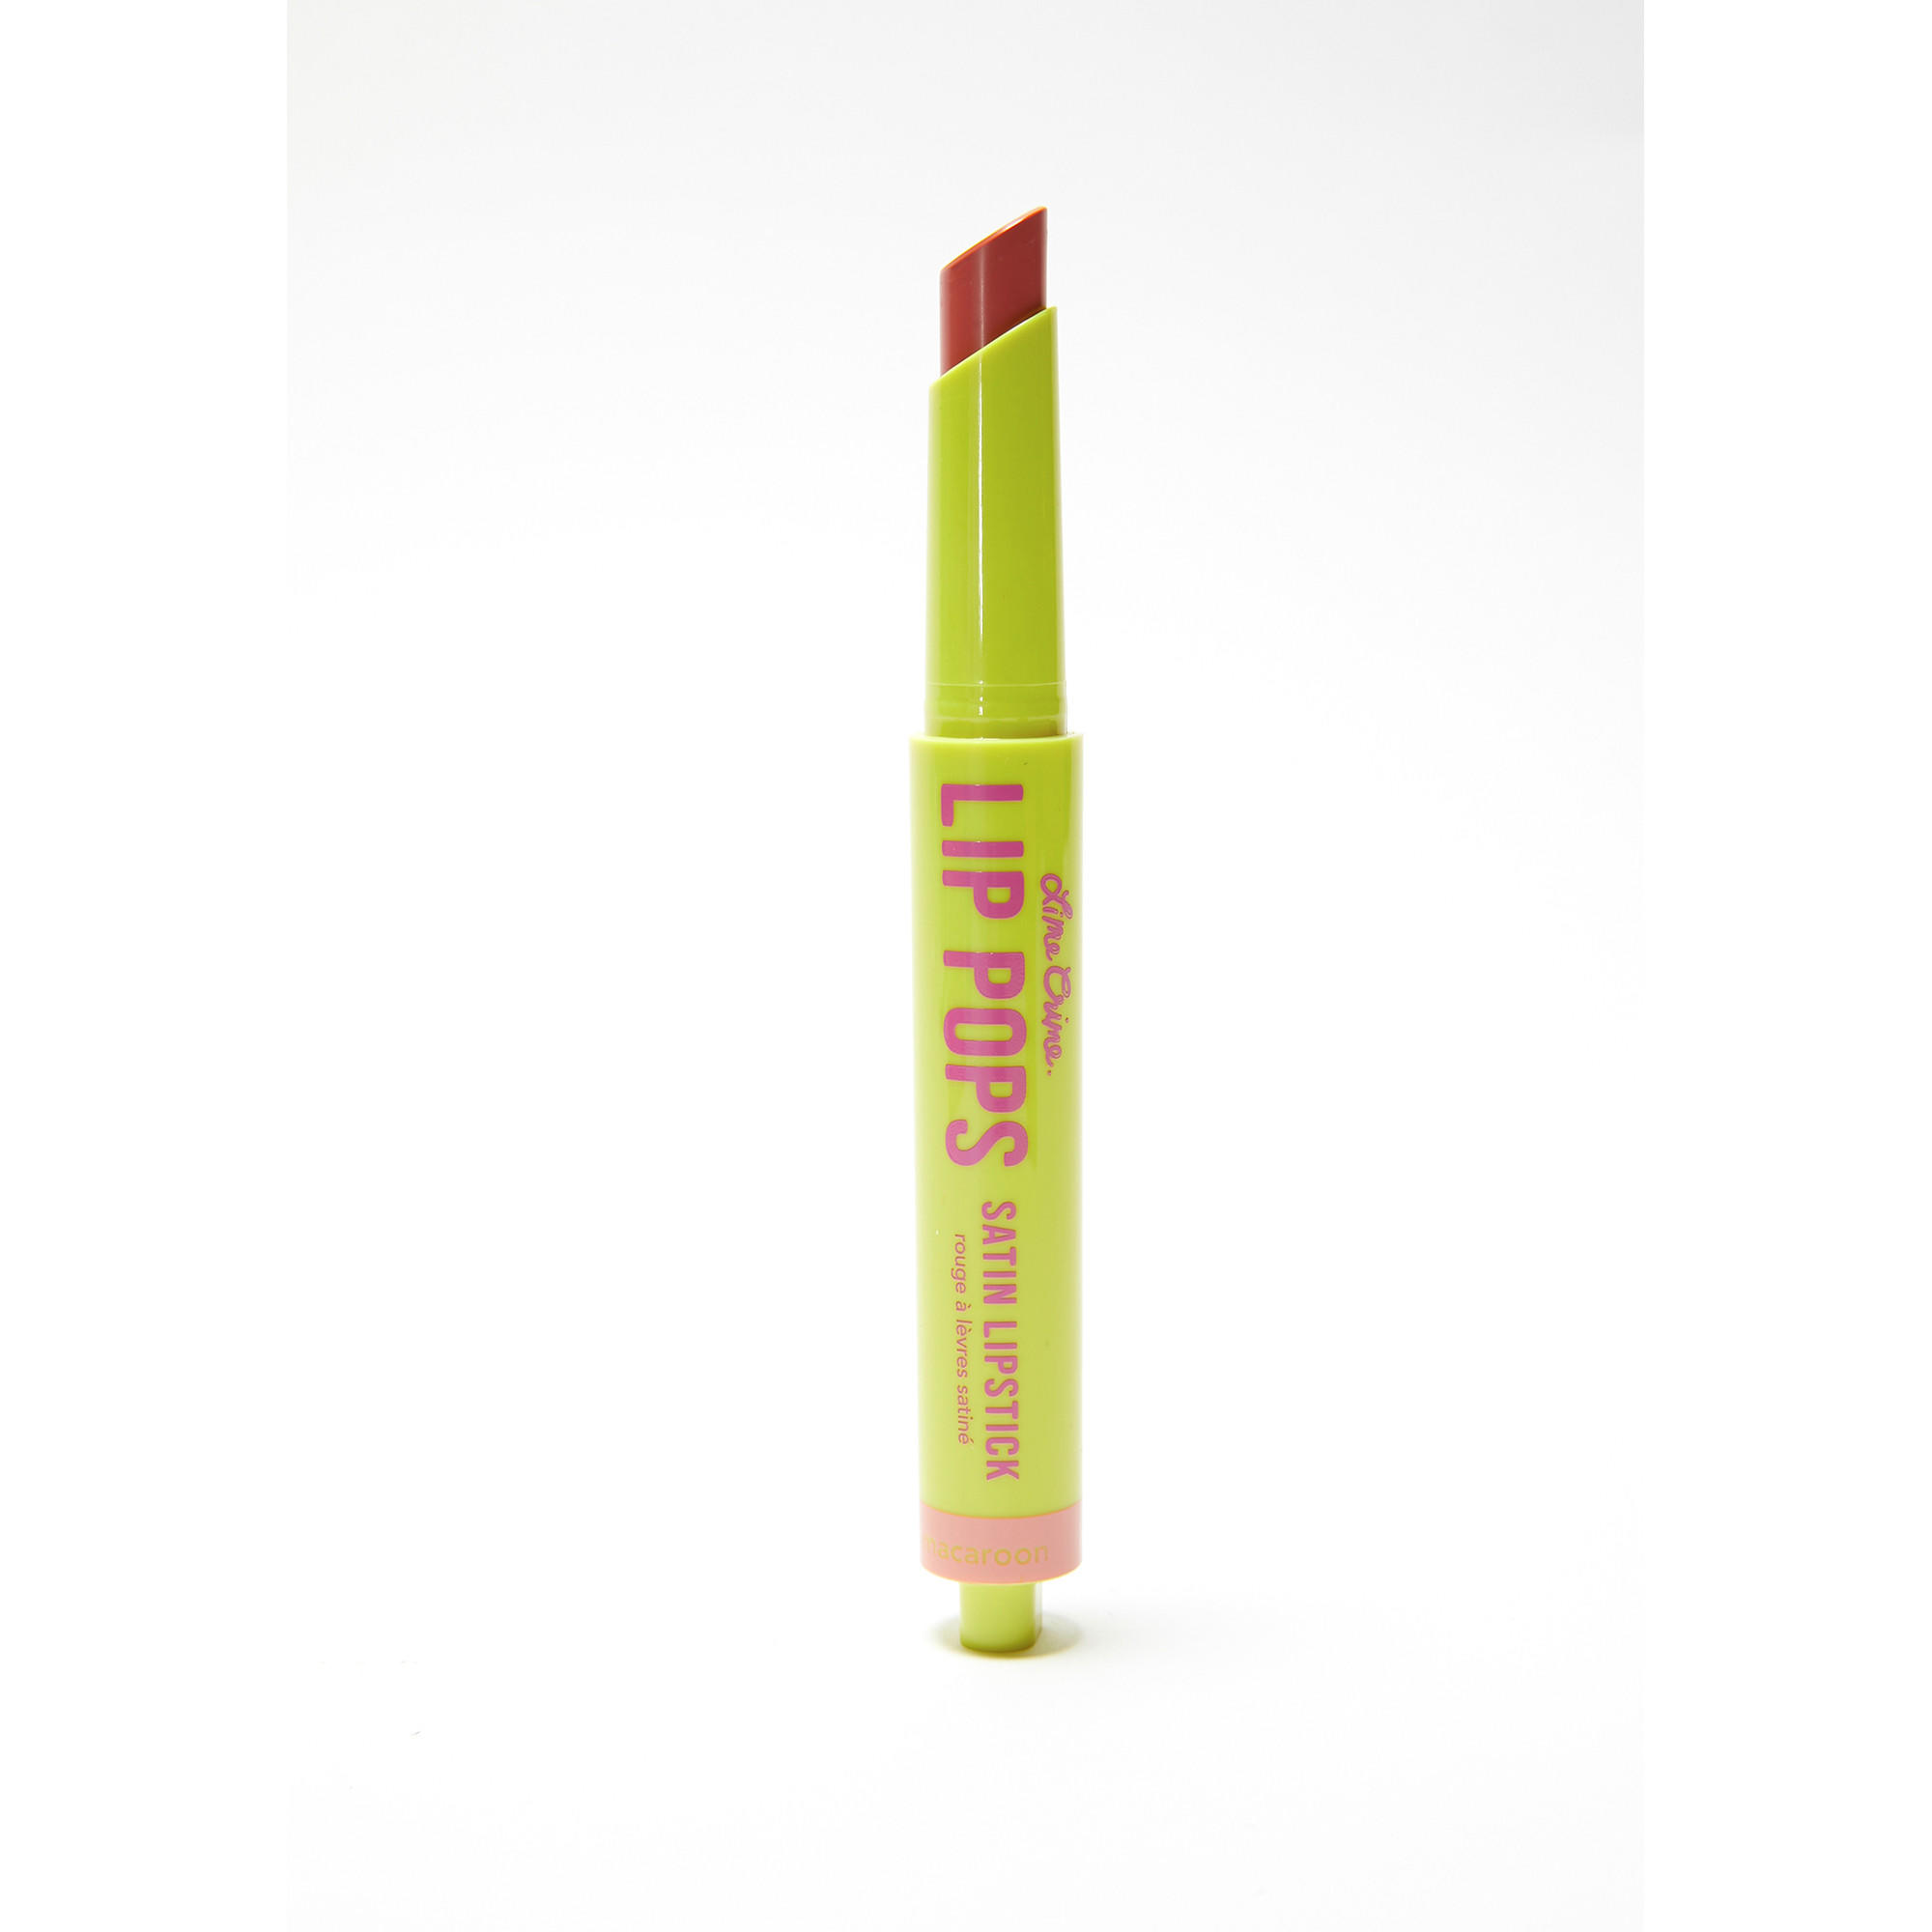 Lime Crime Lip Pops Satin Lipstick Macaroon